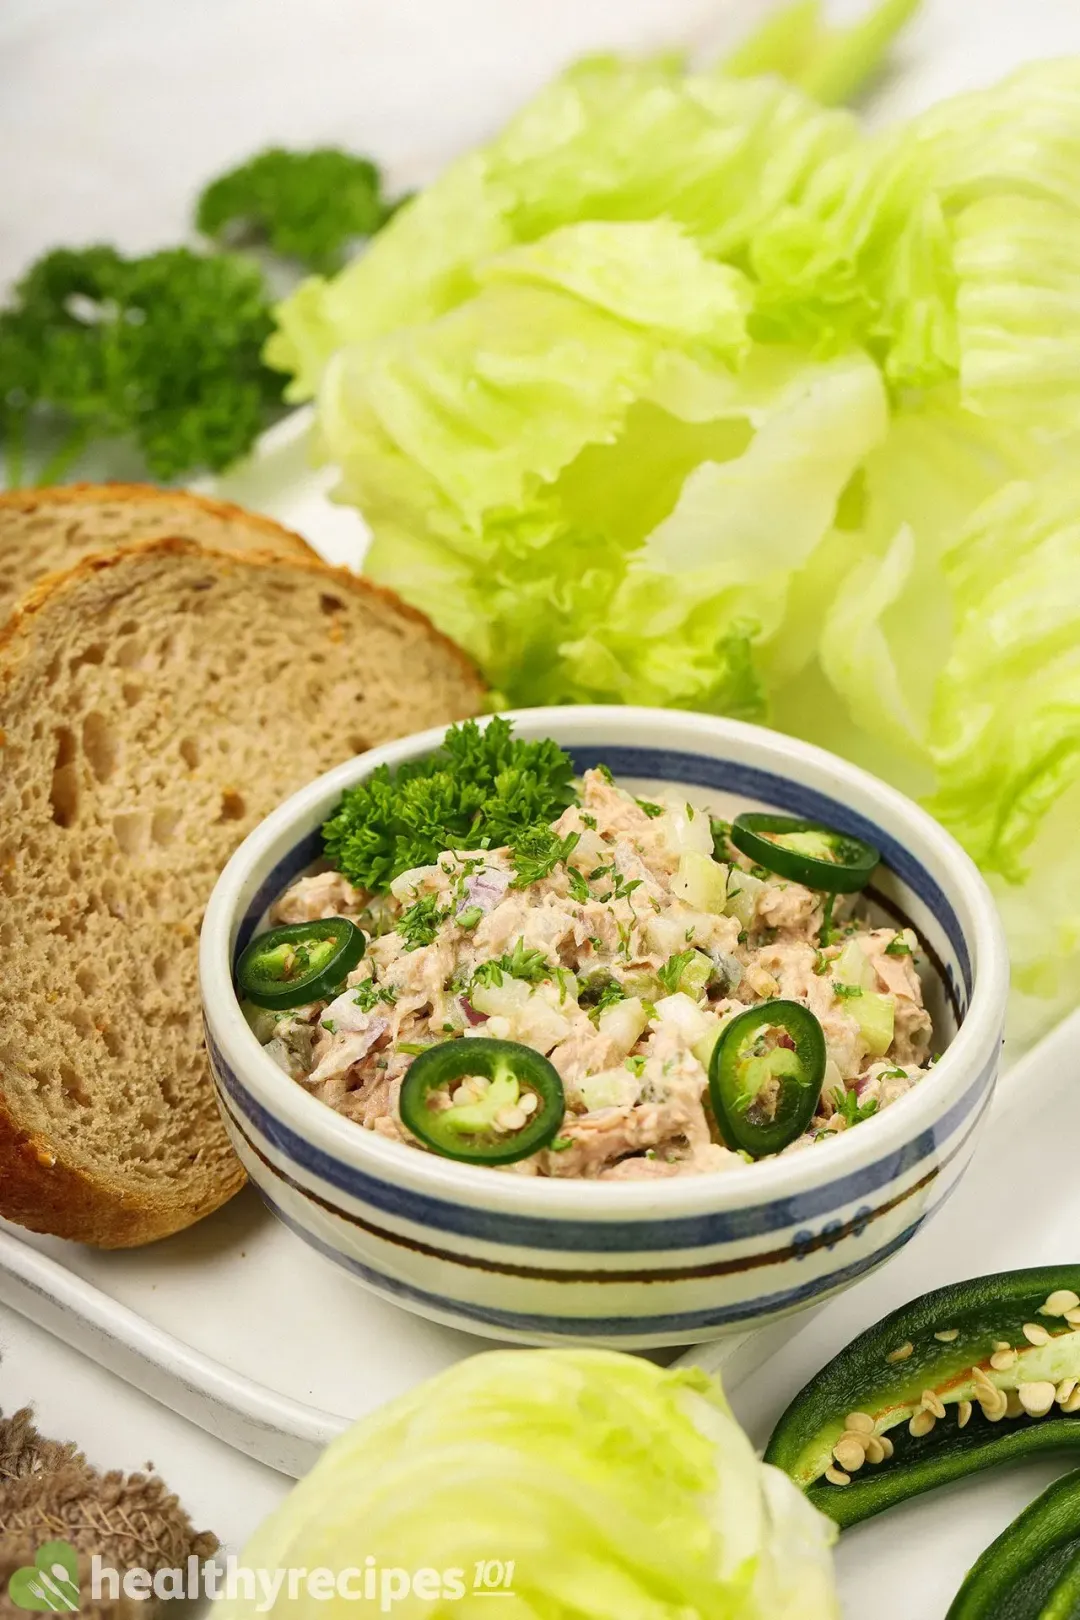 Is This Classic Tuna Salad Healthy